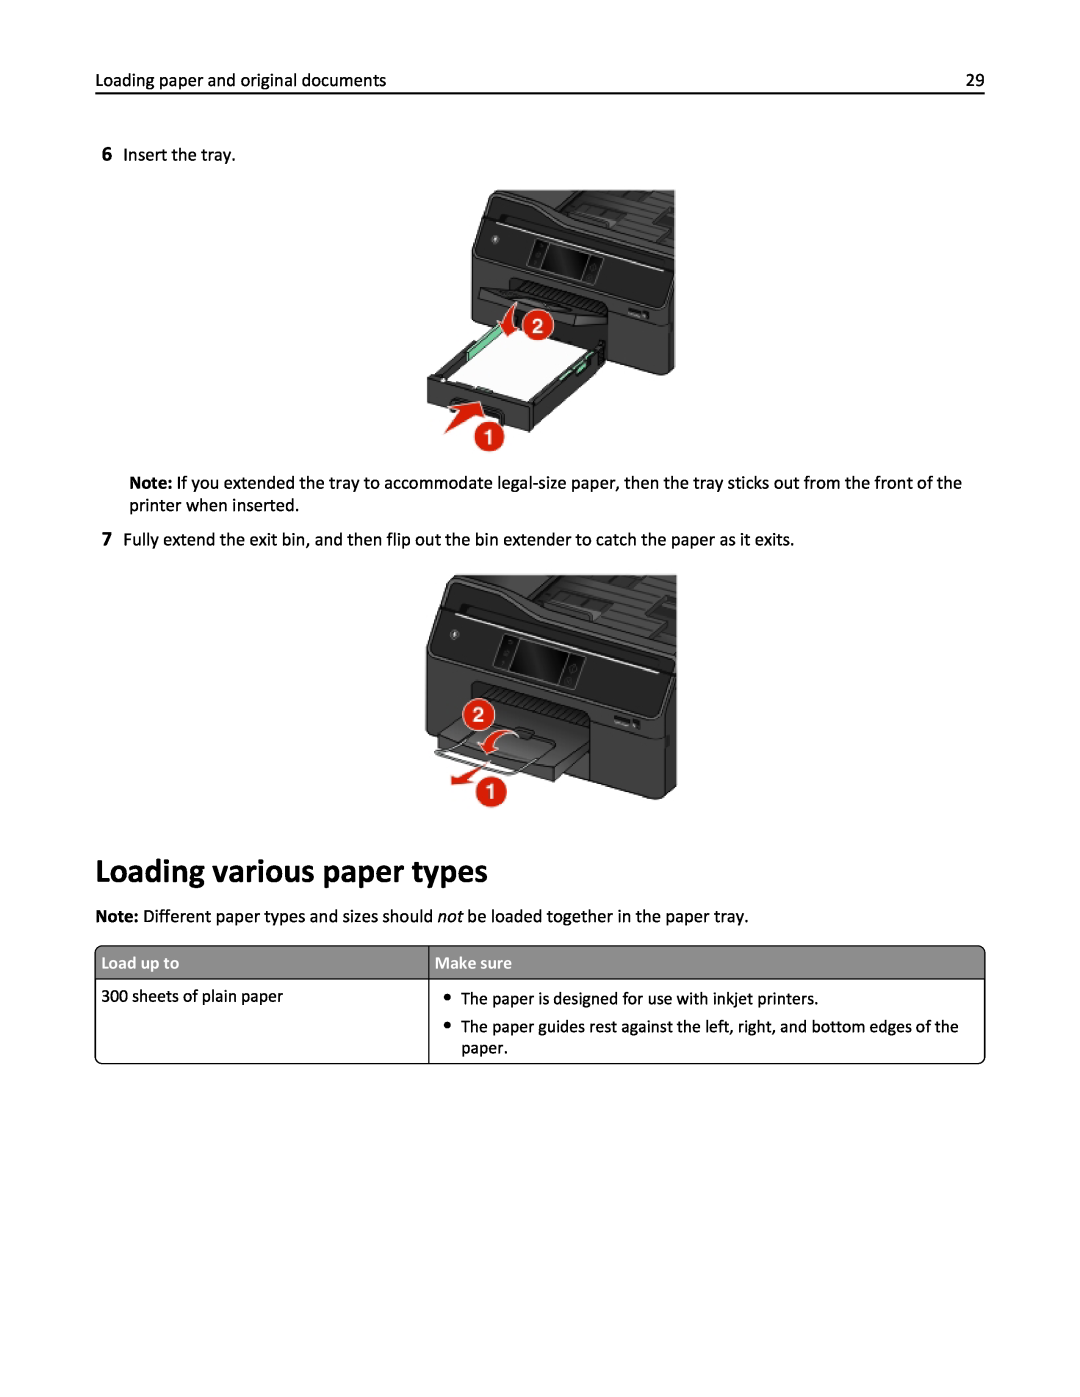 Lexmark 200, 20E manual Loading various paper types 